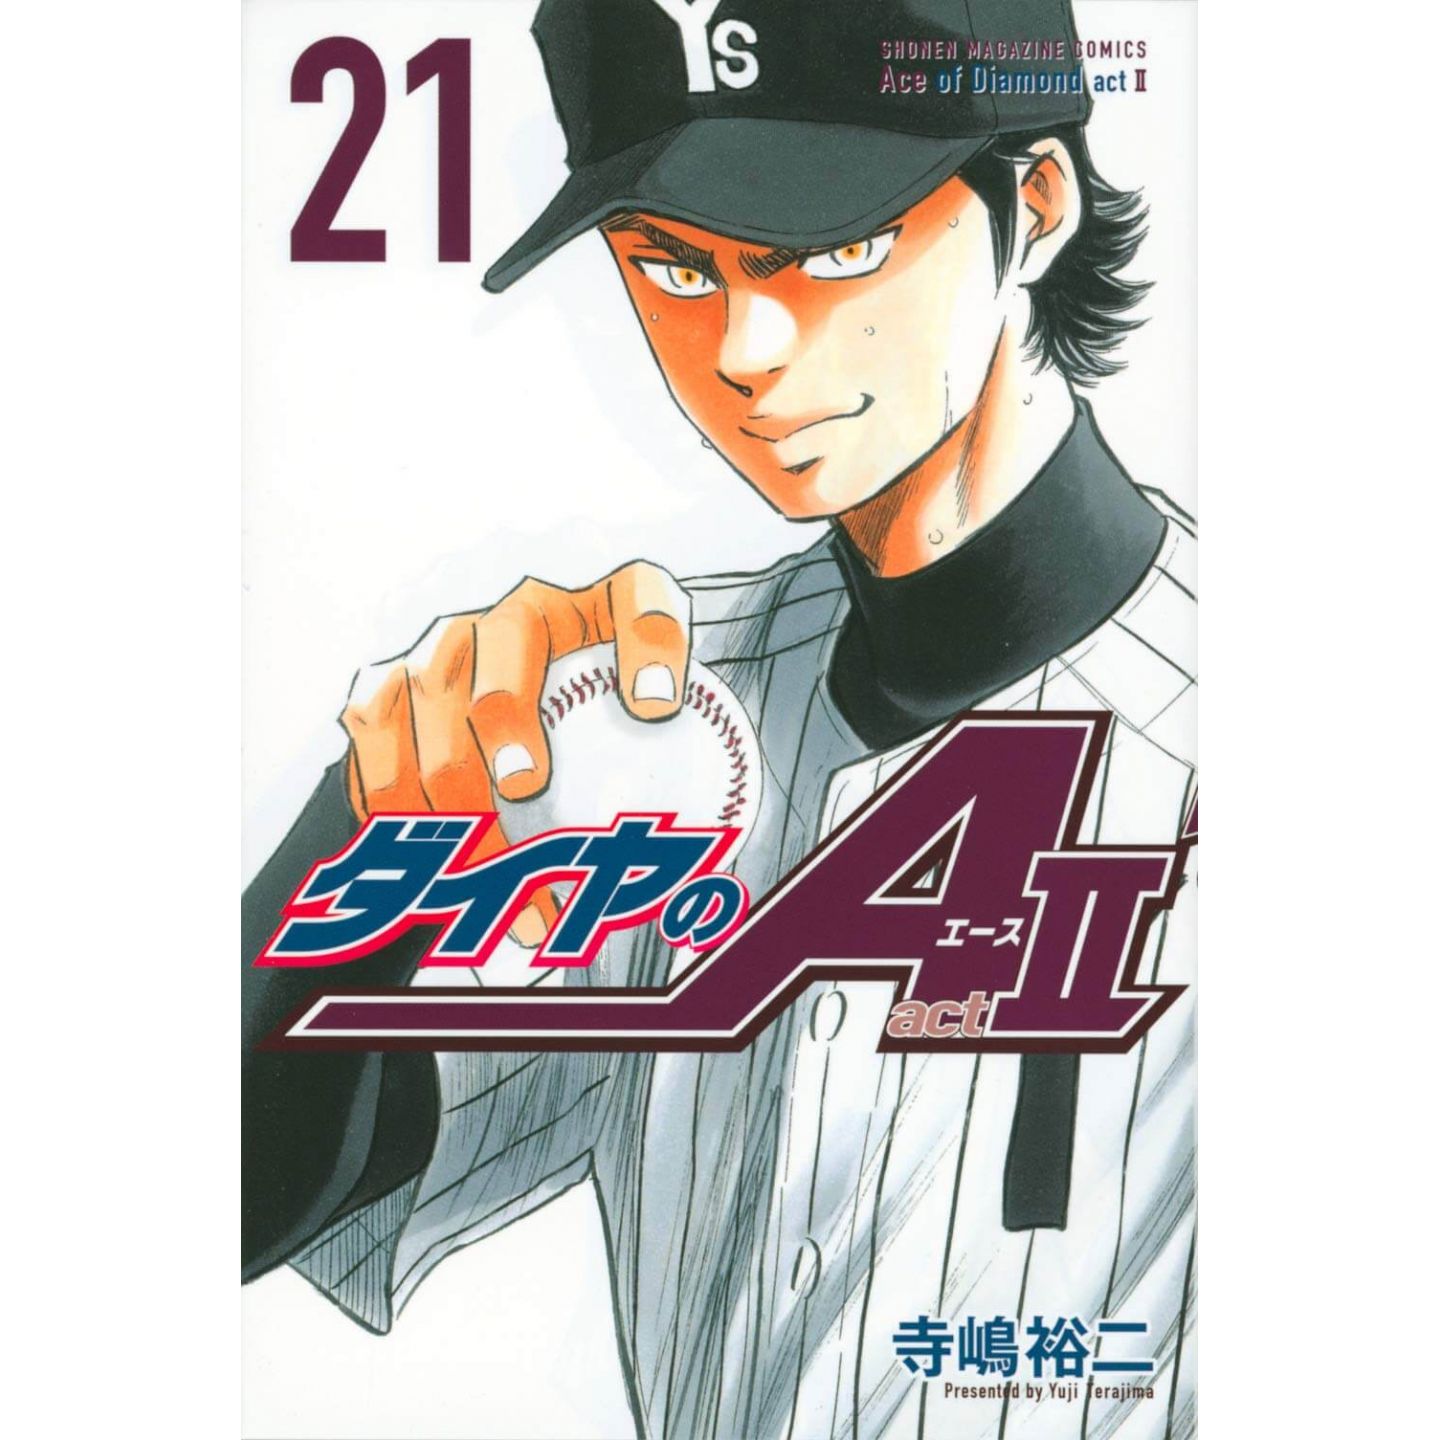 ACE OF DIAMOND act II Vol. 28 Yuji Terajima Japanese Baseball